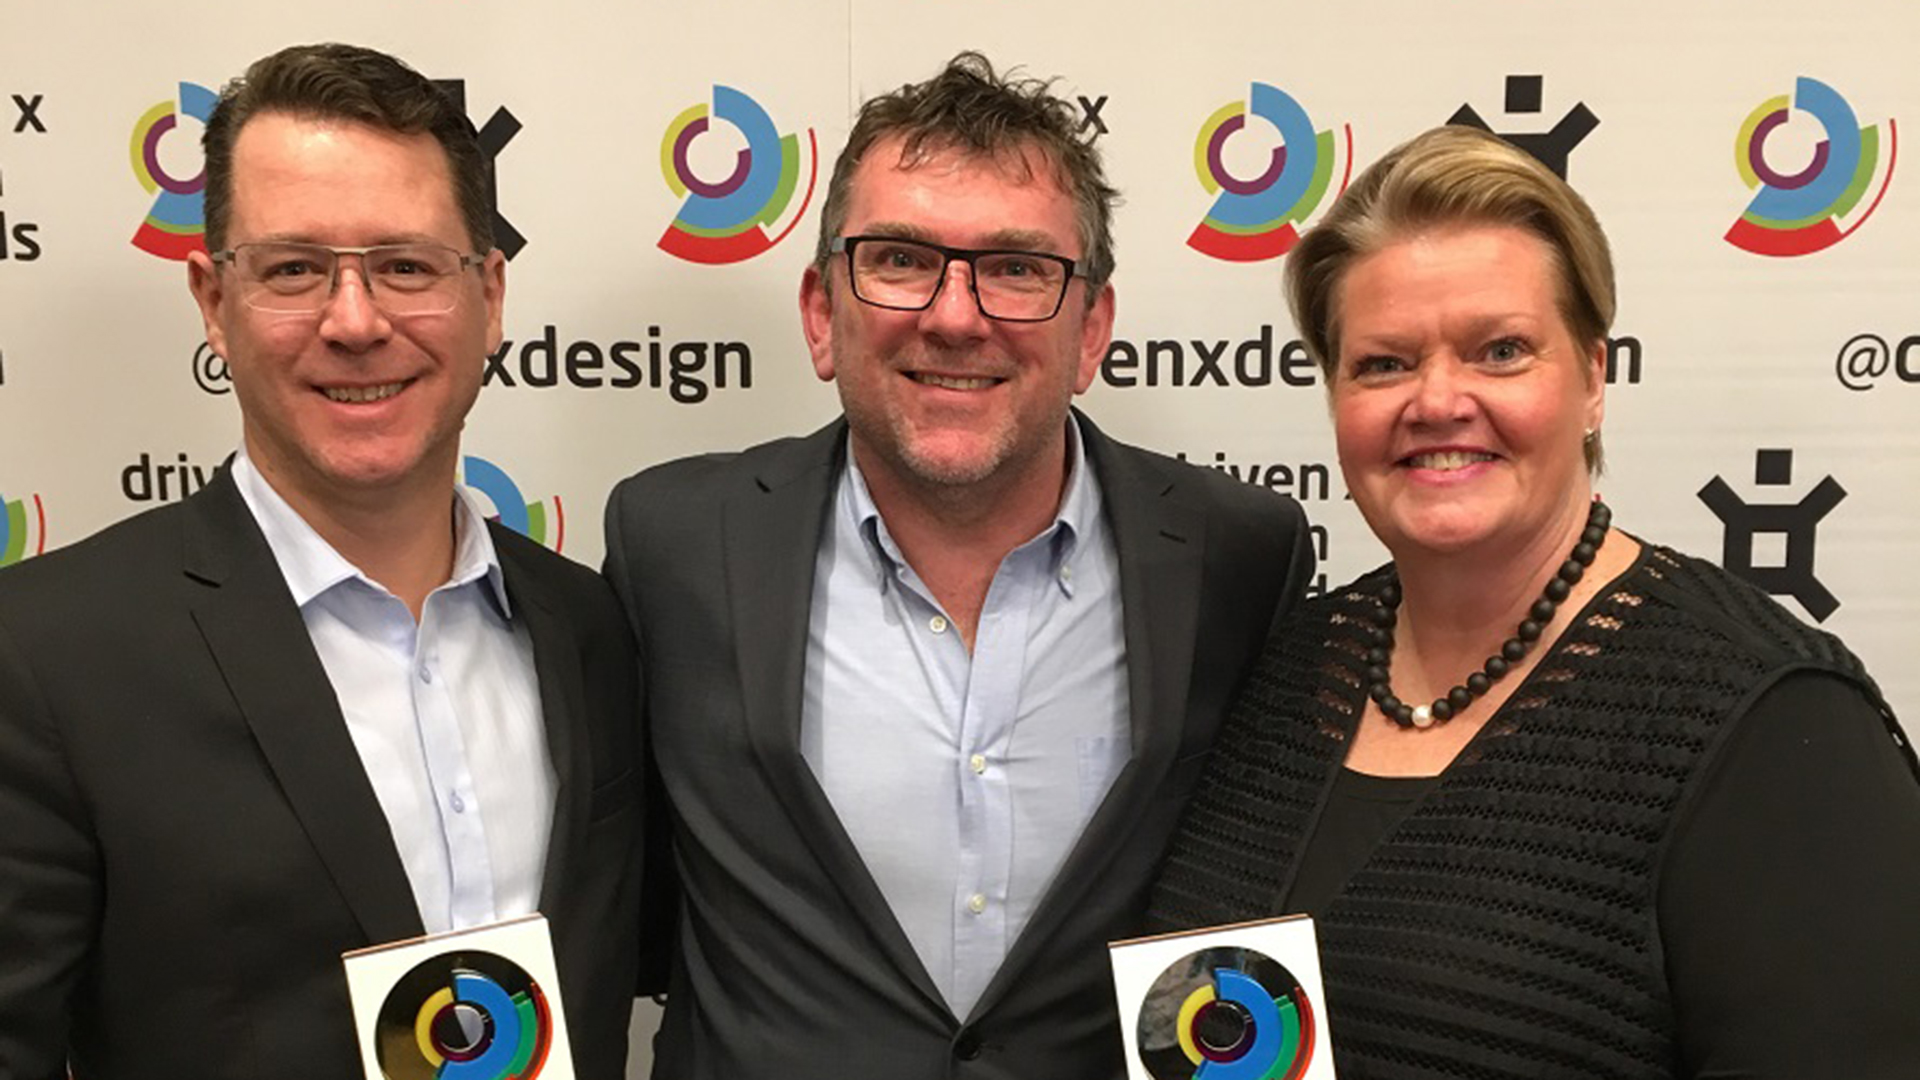 PAYCE named Design Champion at Sydney Design Awards